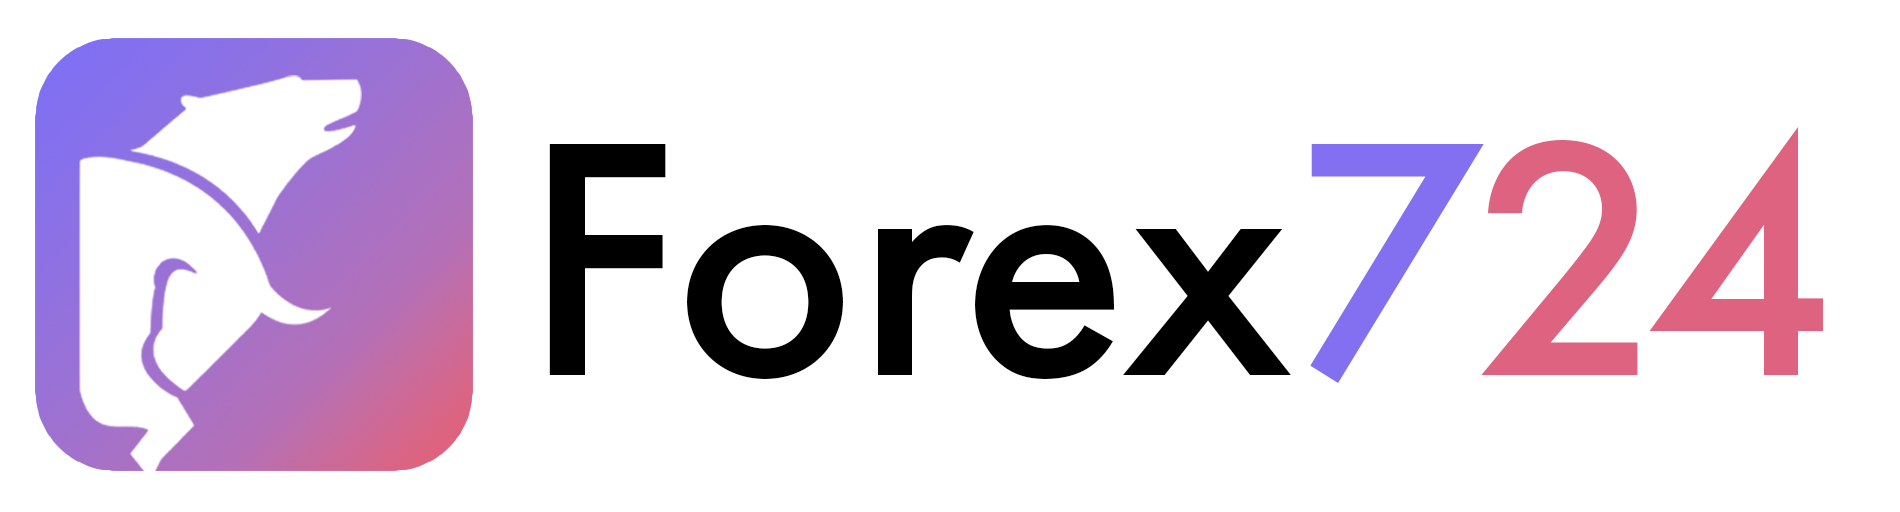 Forex724